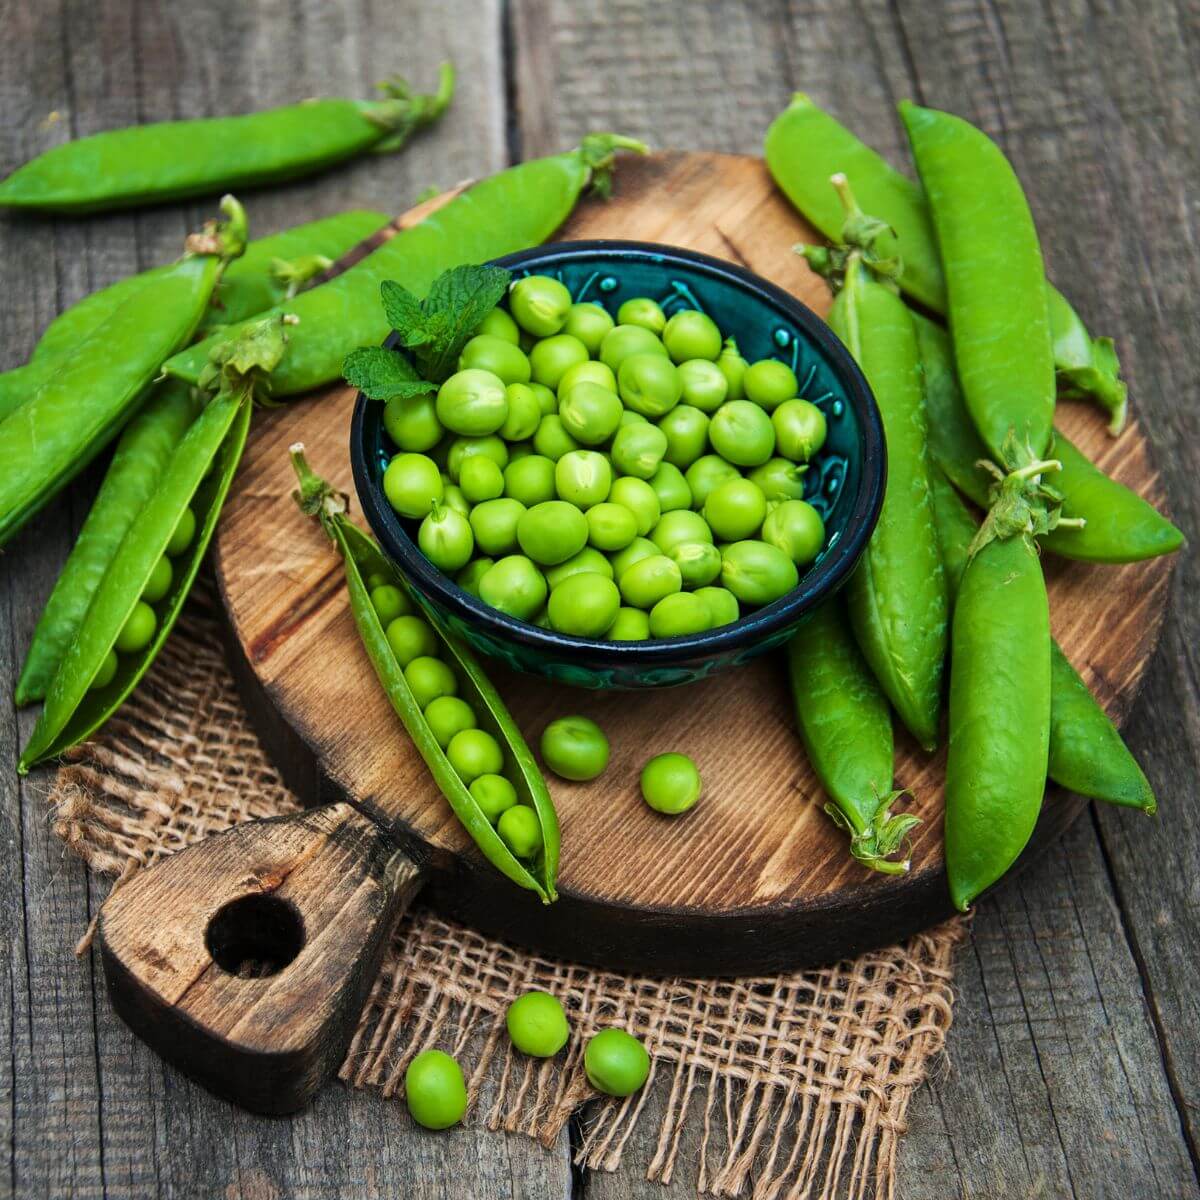 Peas - Nutrition, Health, and Beauty Benefits